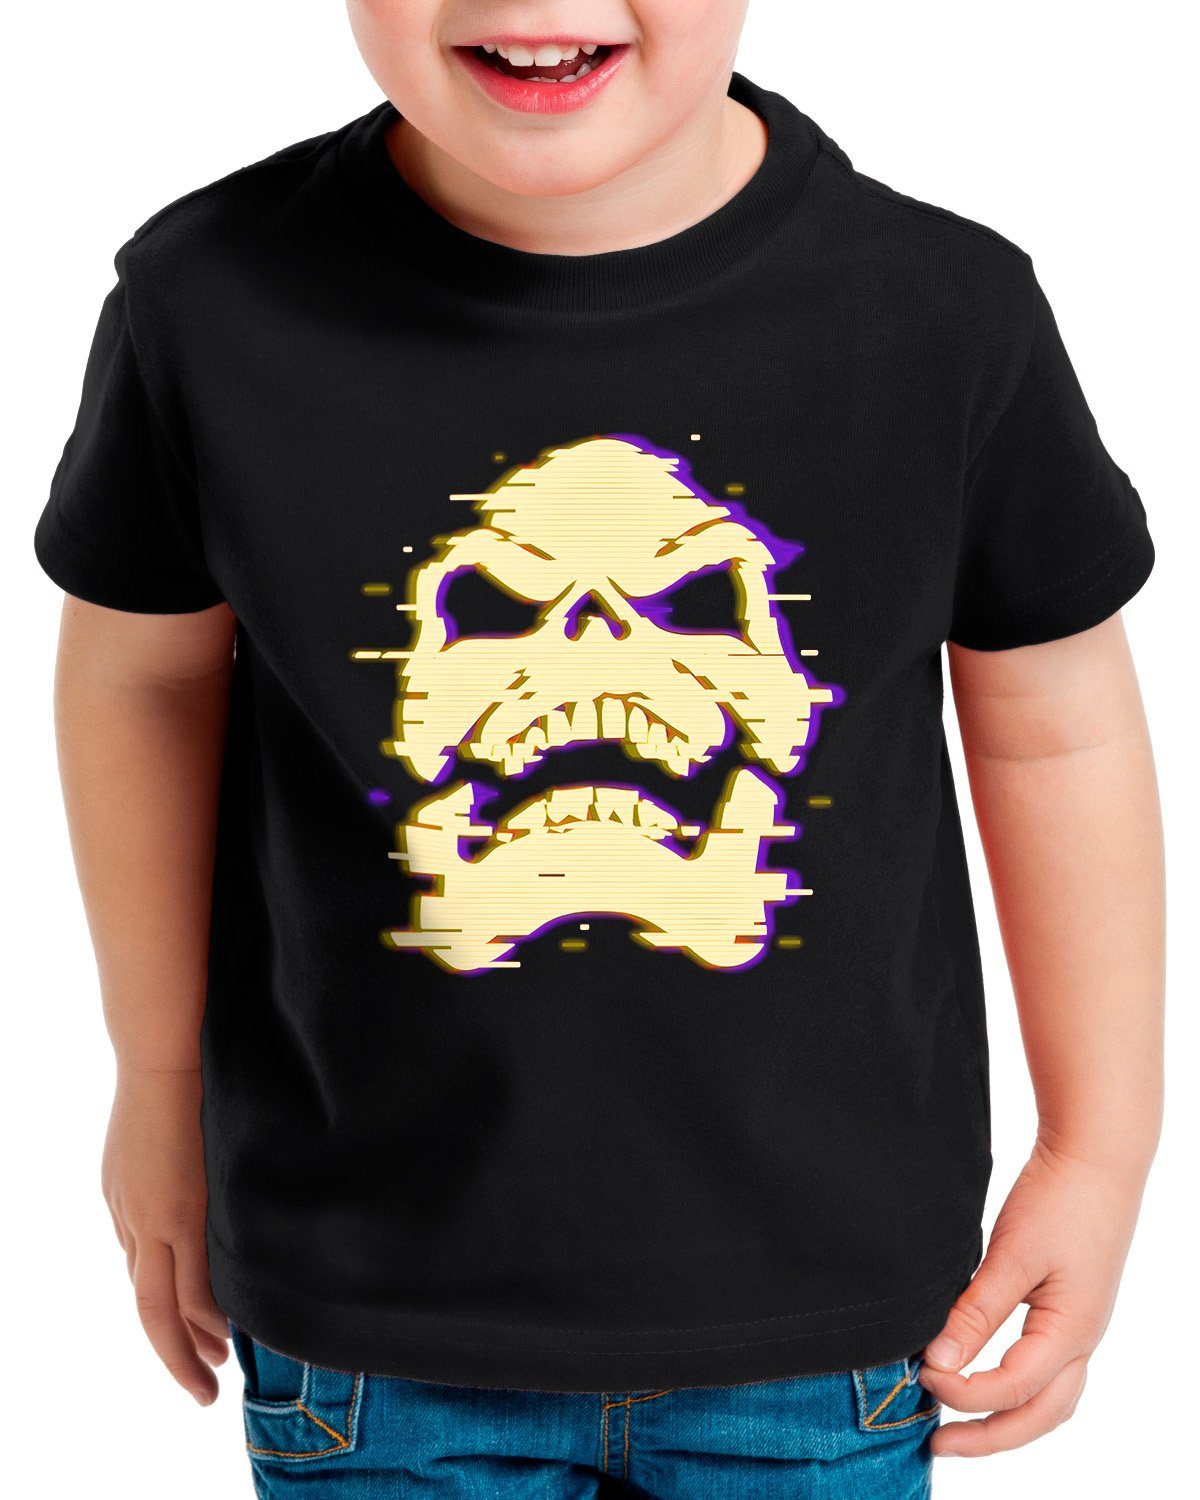 Glitch Kinder masters Print-Shirt skeletor T-Shirt he-man Skeletor style3 of the universe